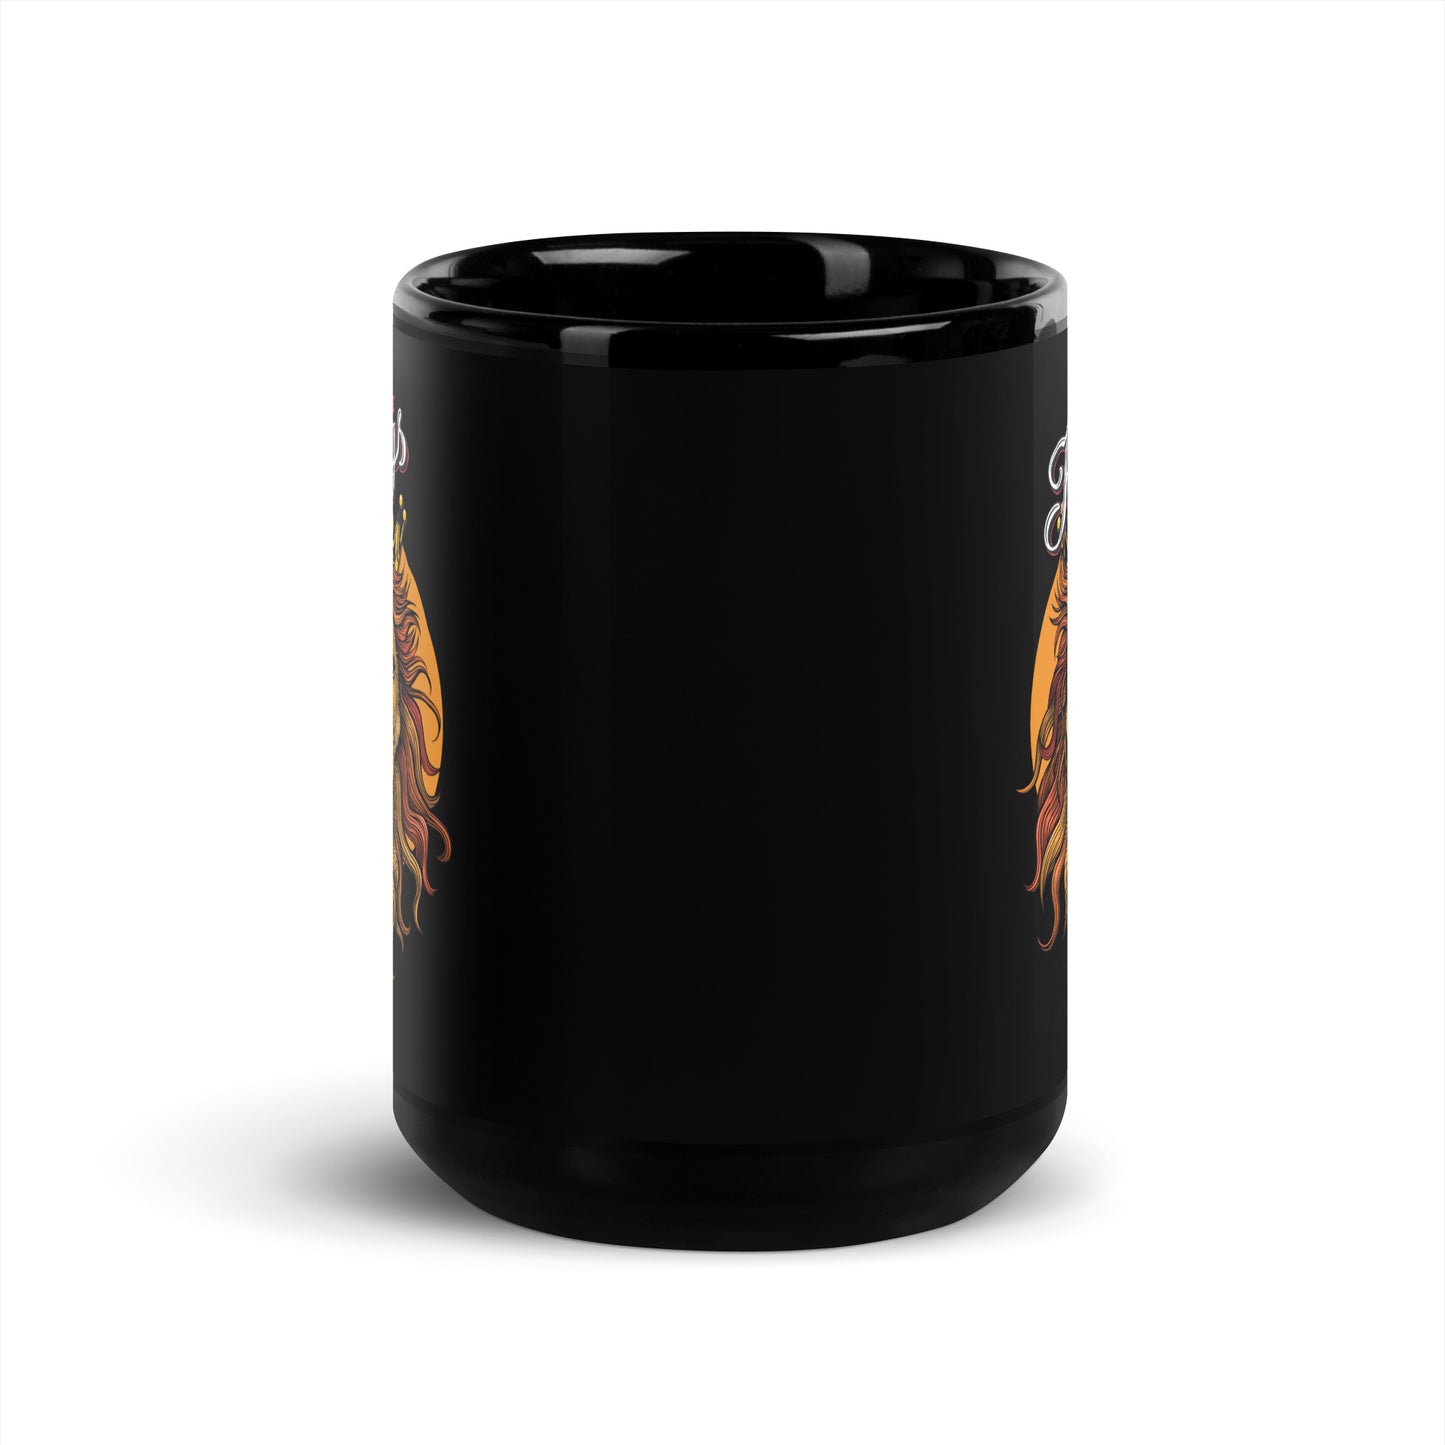 True Kings Alien Coffee Mug